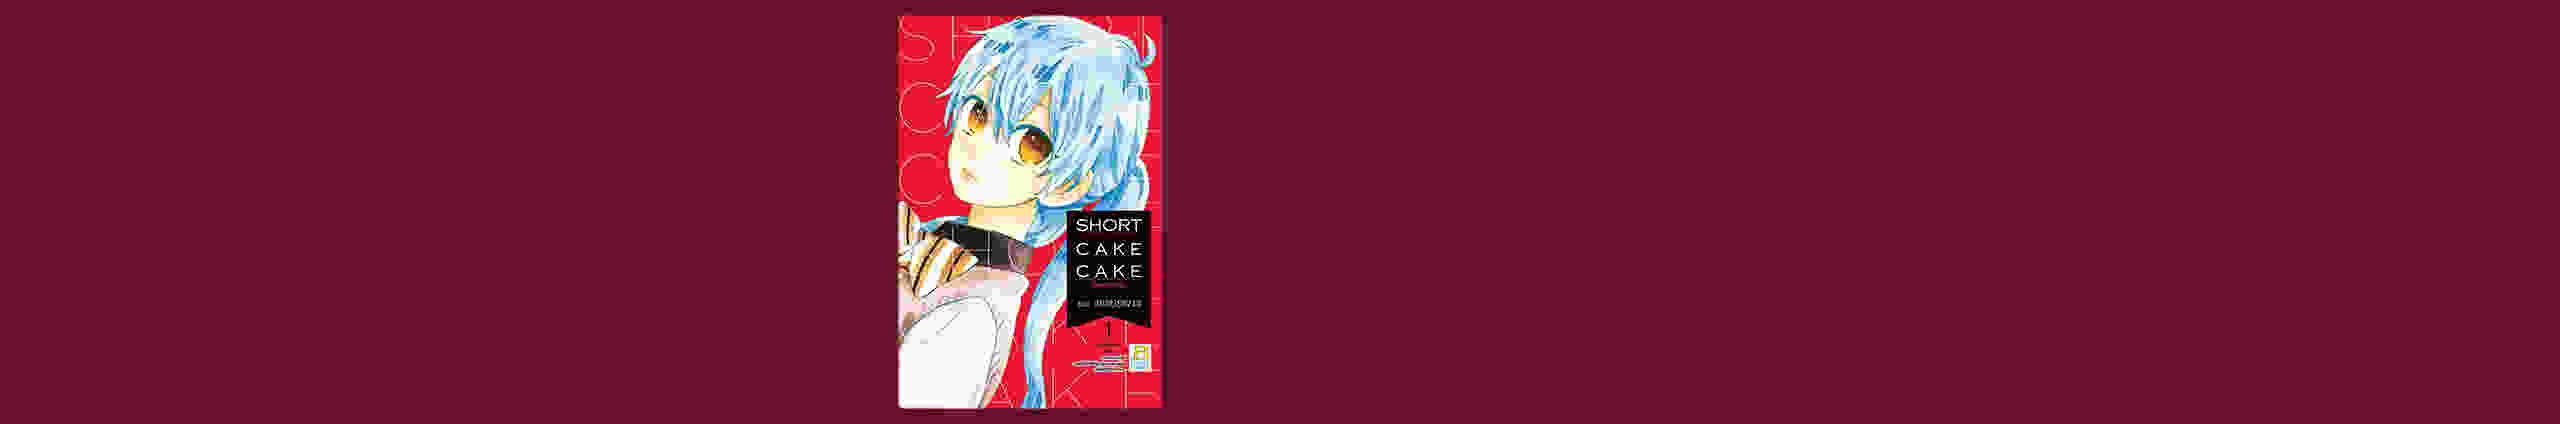 SHORT CAKE CAKE ช็อตเค้กสื่อรัก